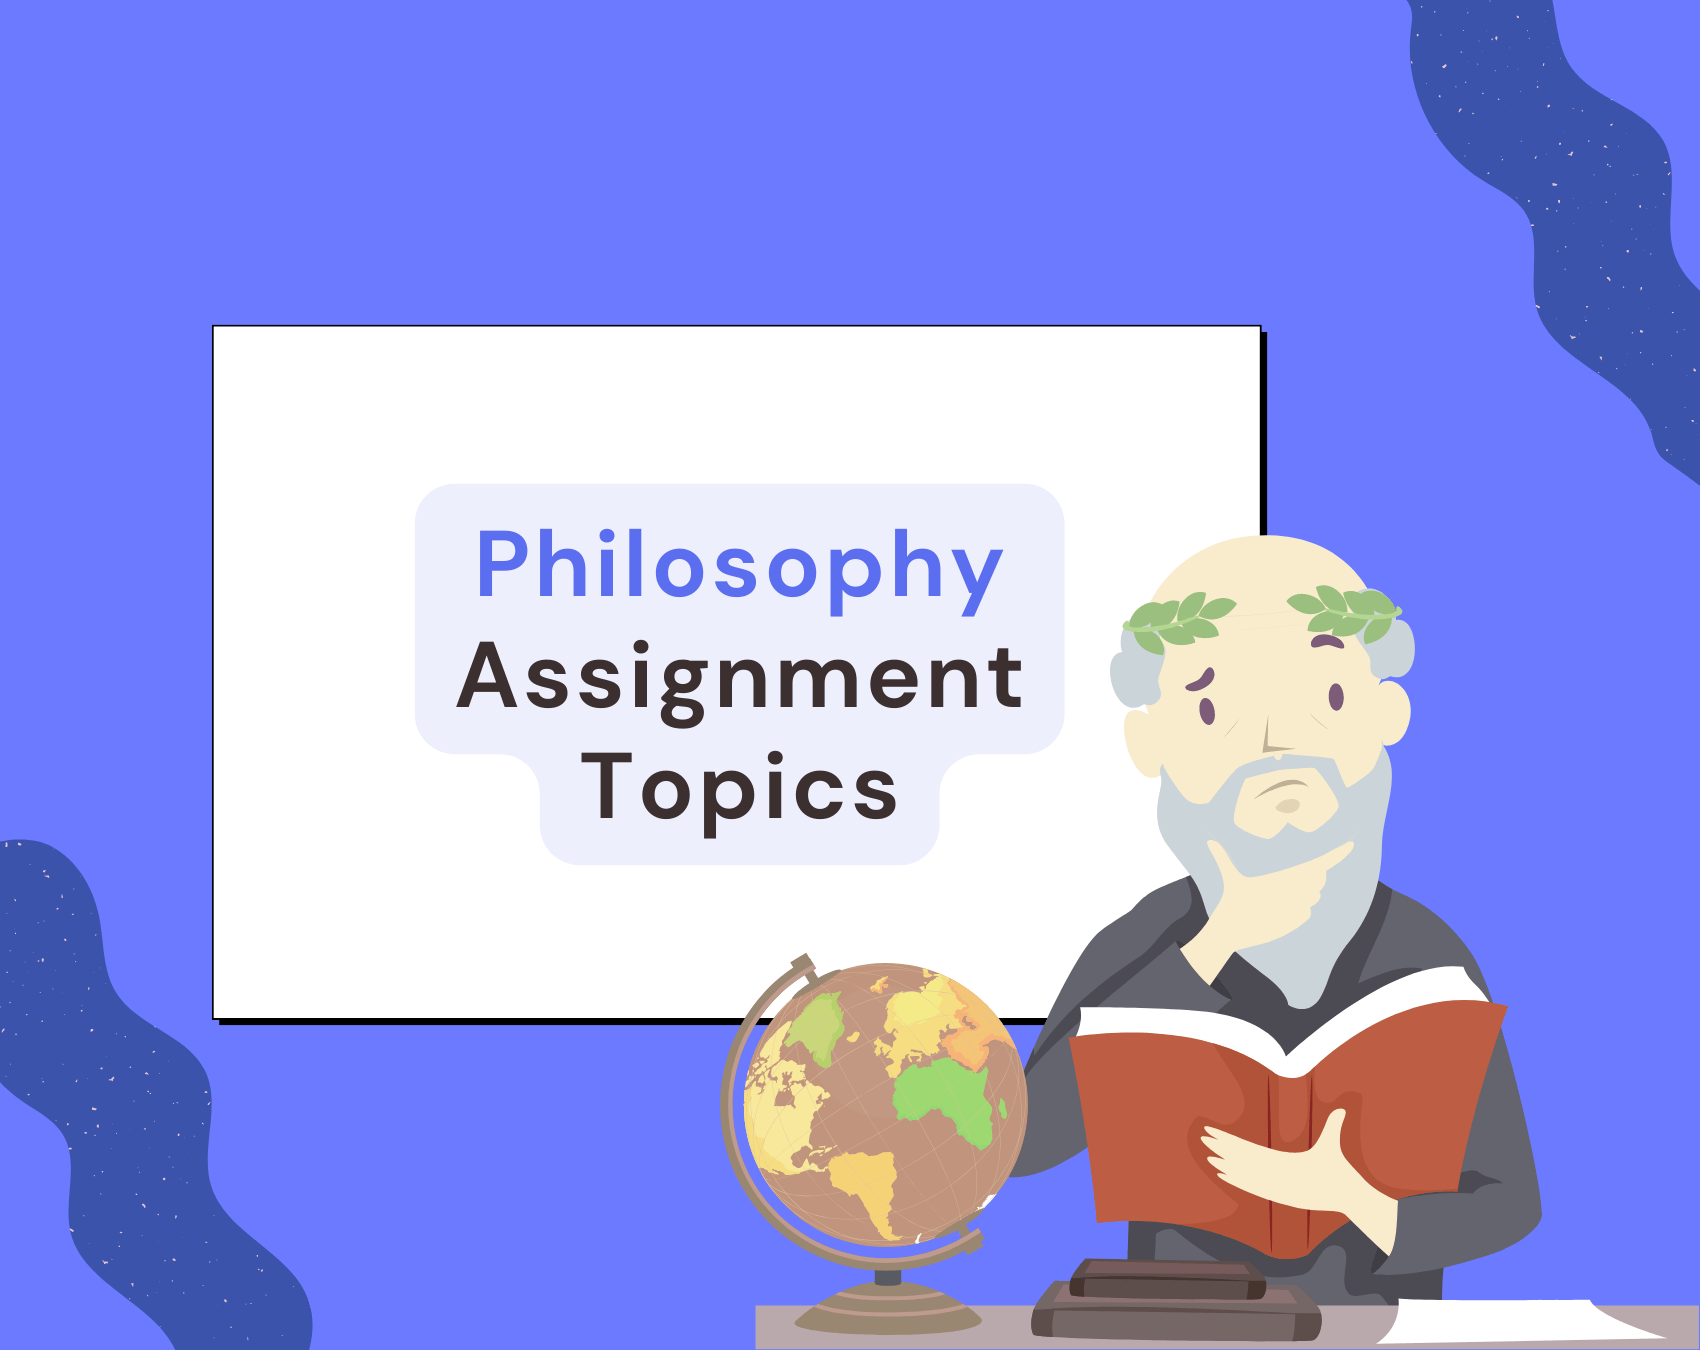 Philosophy APhilosophy Assignment Topicsssignment Topics